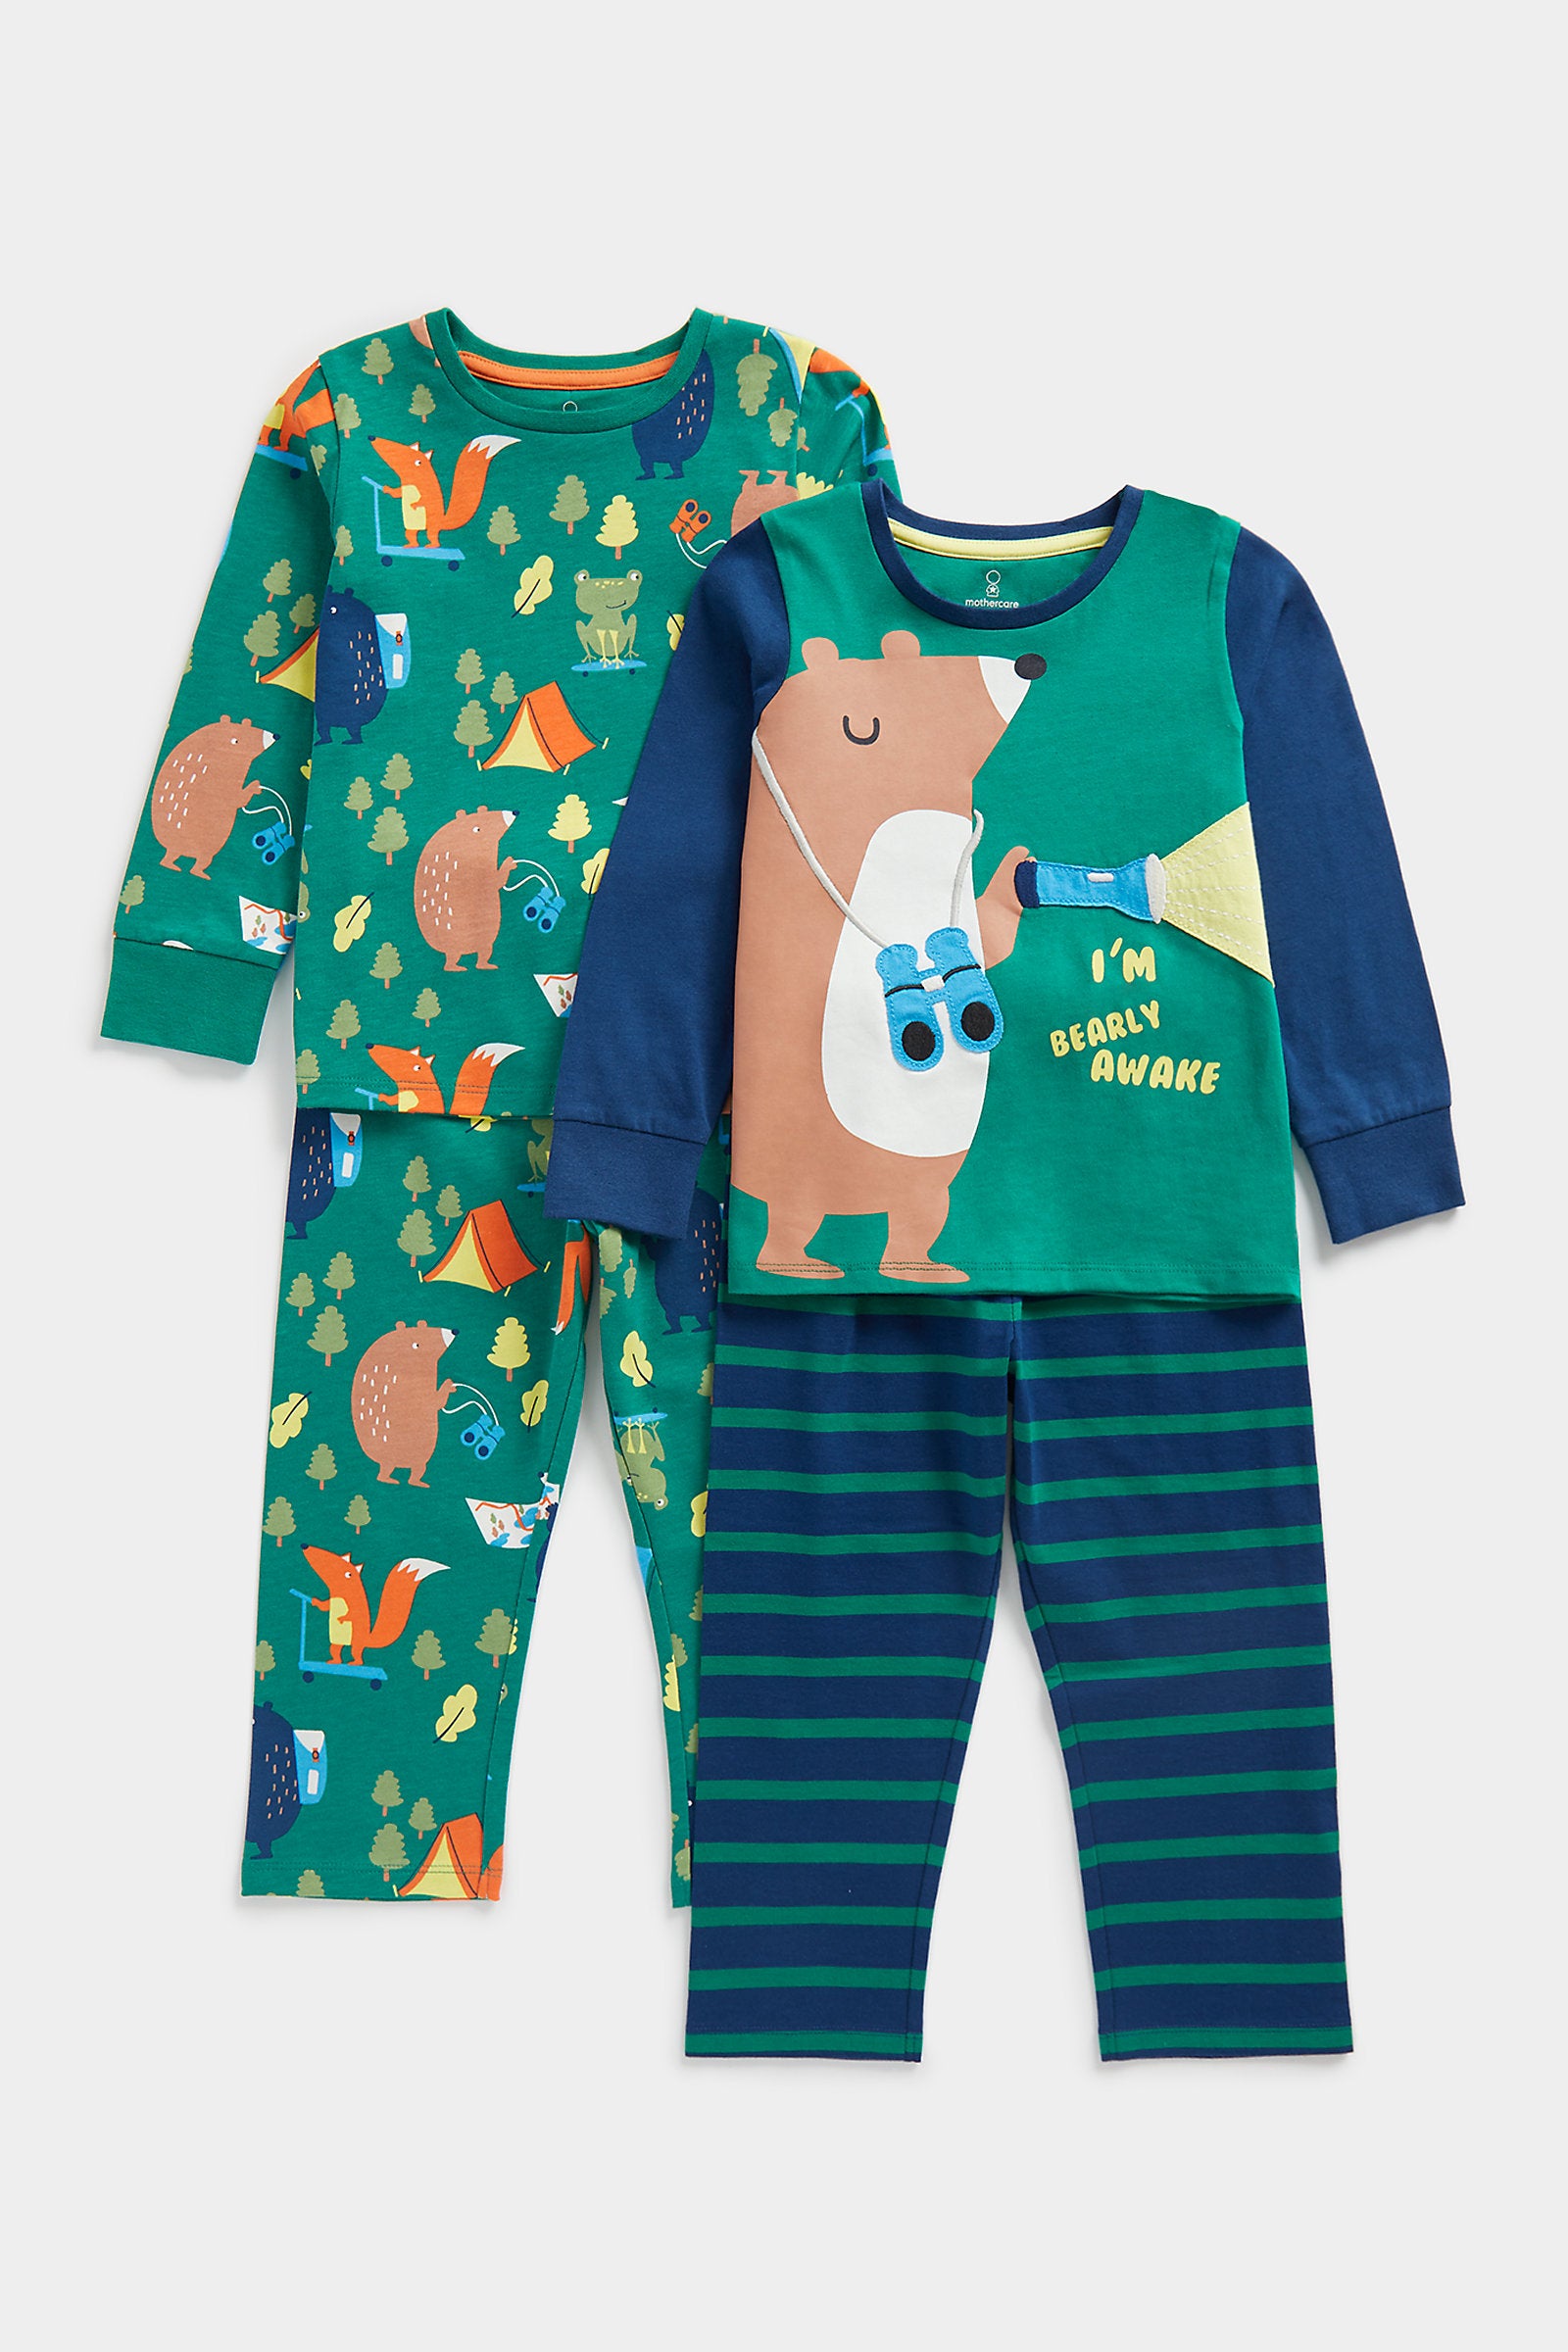 Mothercare Camping Adventure Pyjamas - 2 Pack